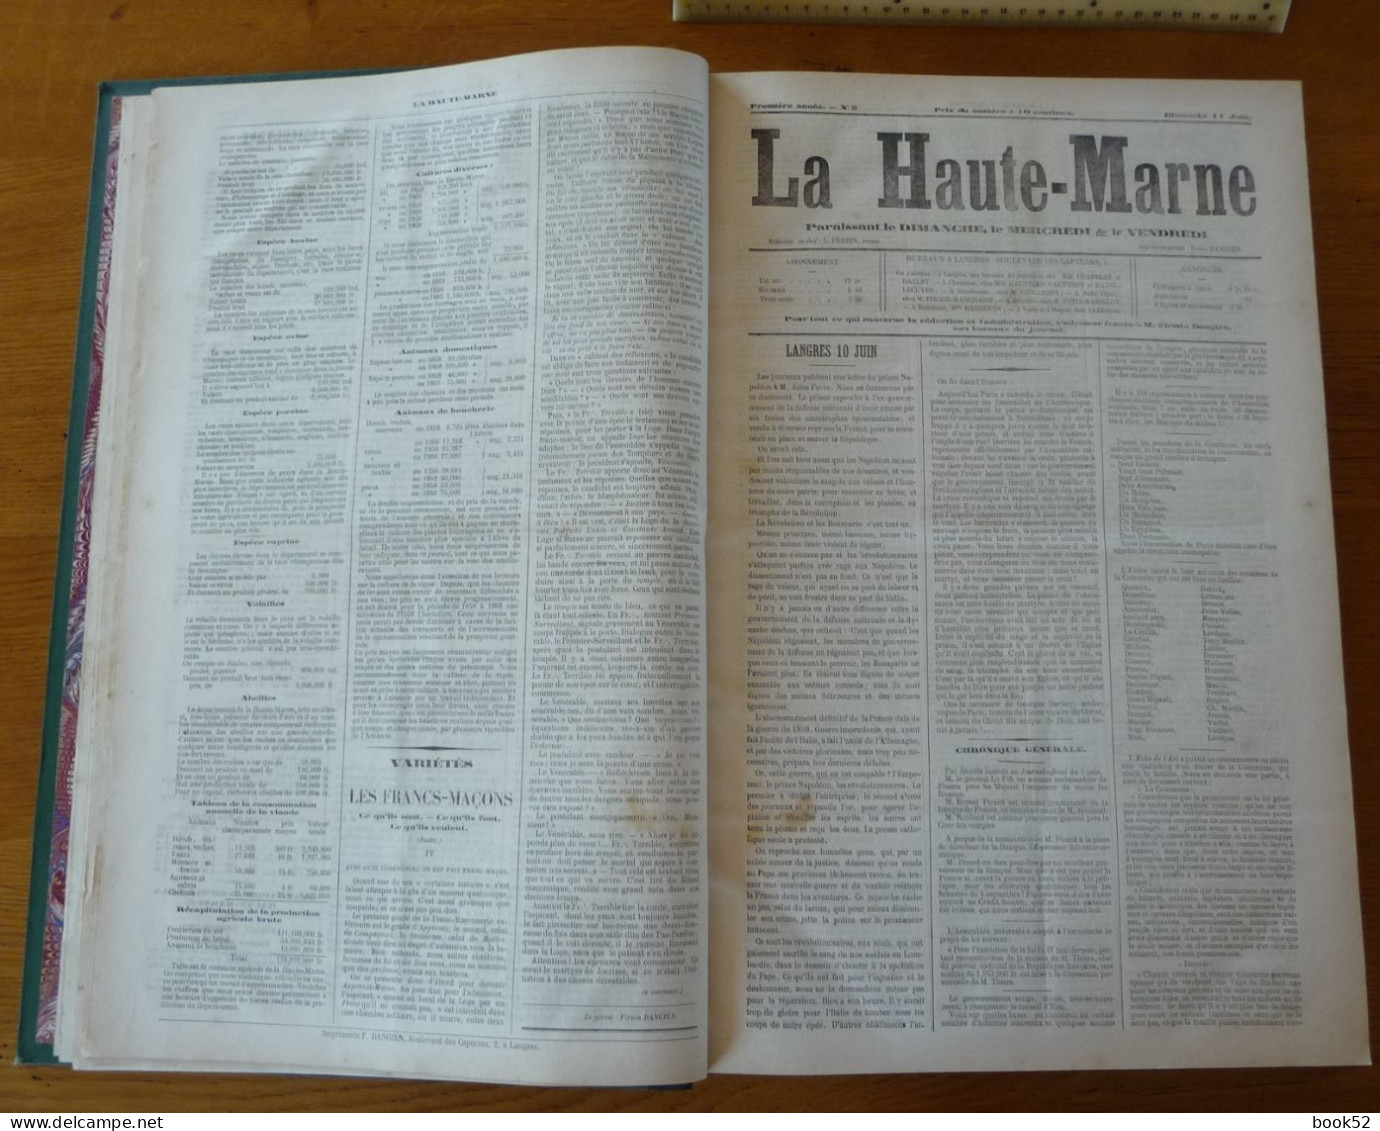 ** UNIQUE ** Le Journal LA HAUTE-MARNE - Toute La PREMIERE ANNEE 1871/72 Dans Une Reliure - Champagne - Ardenne